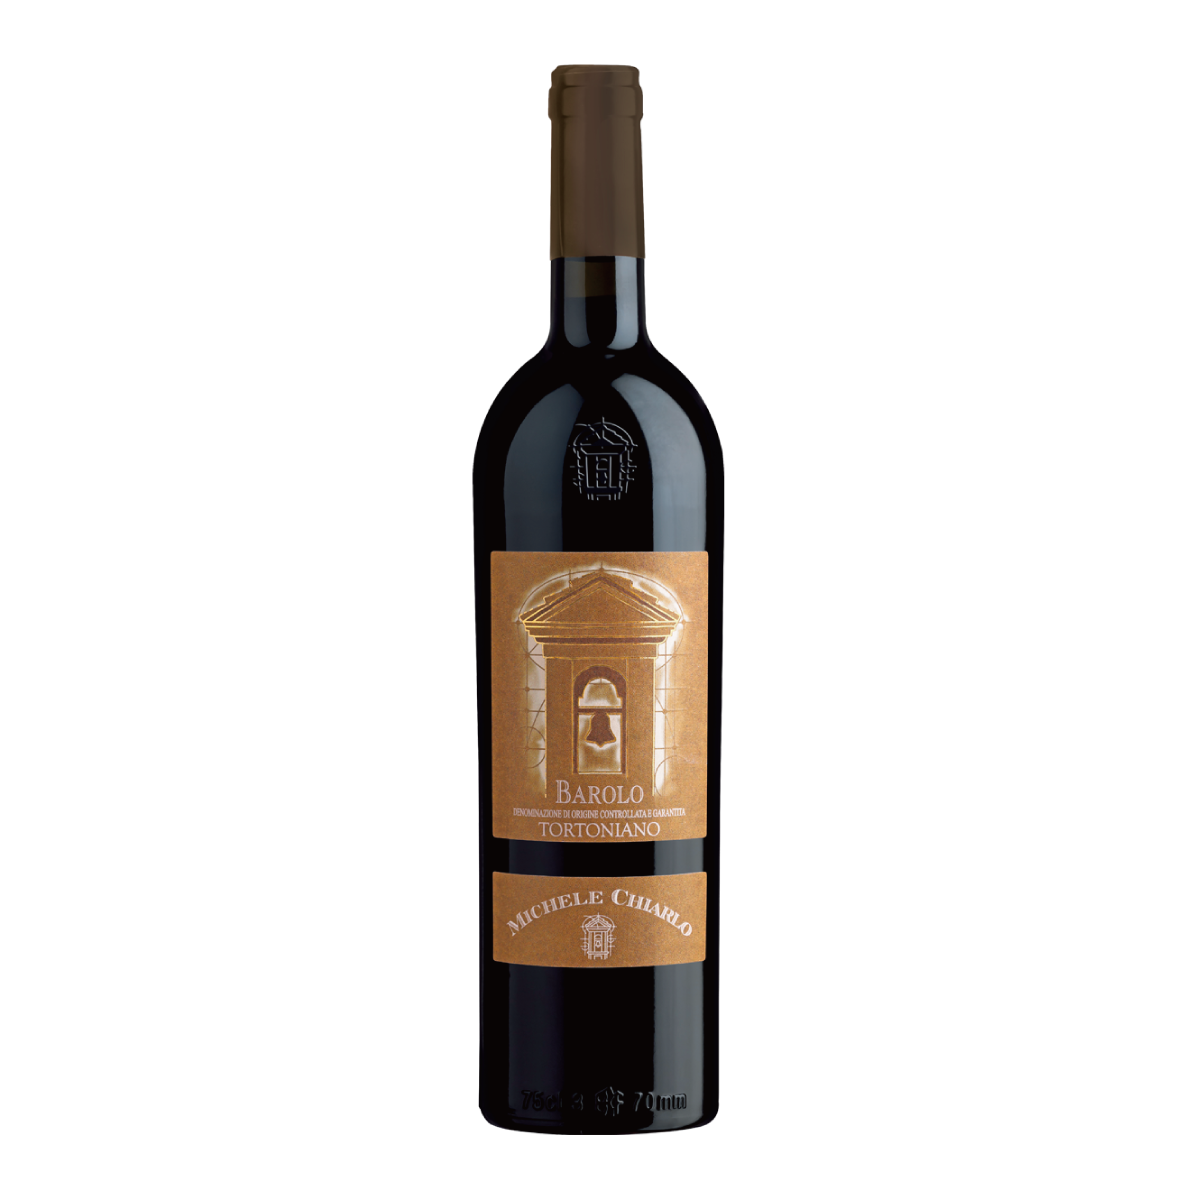 義大利佳樂巴羅洛特級紅酒2017 Michele Chiarlo Barolo D.O.C.G. Tortoniano